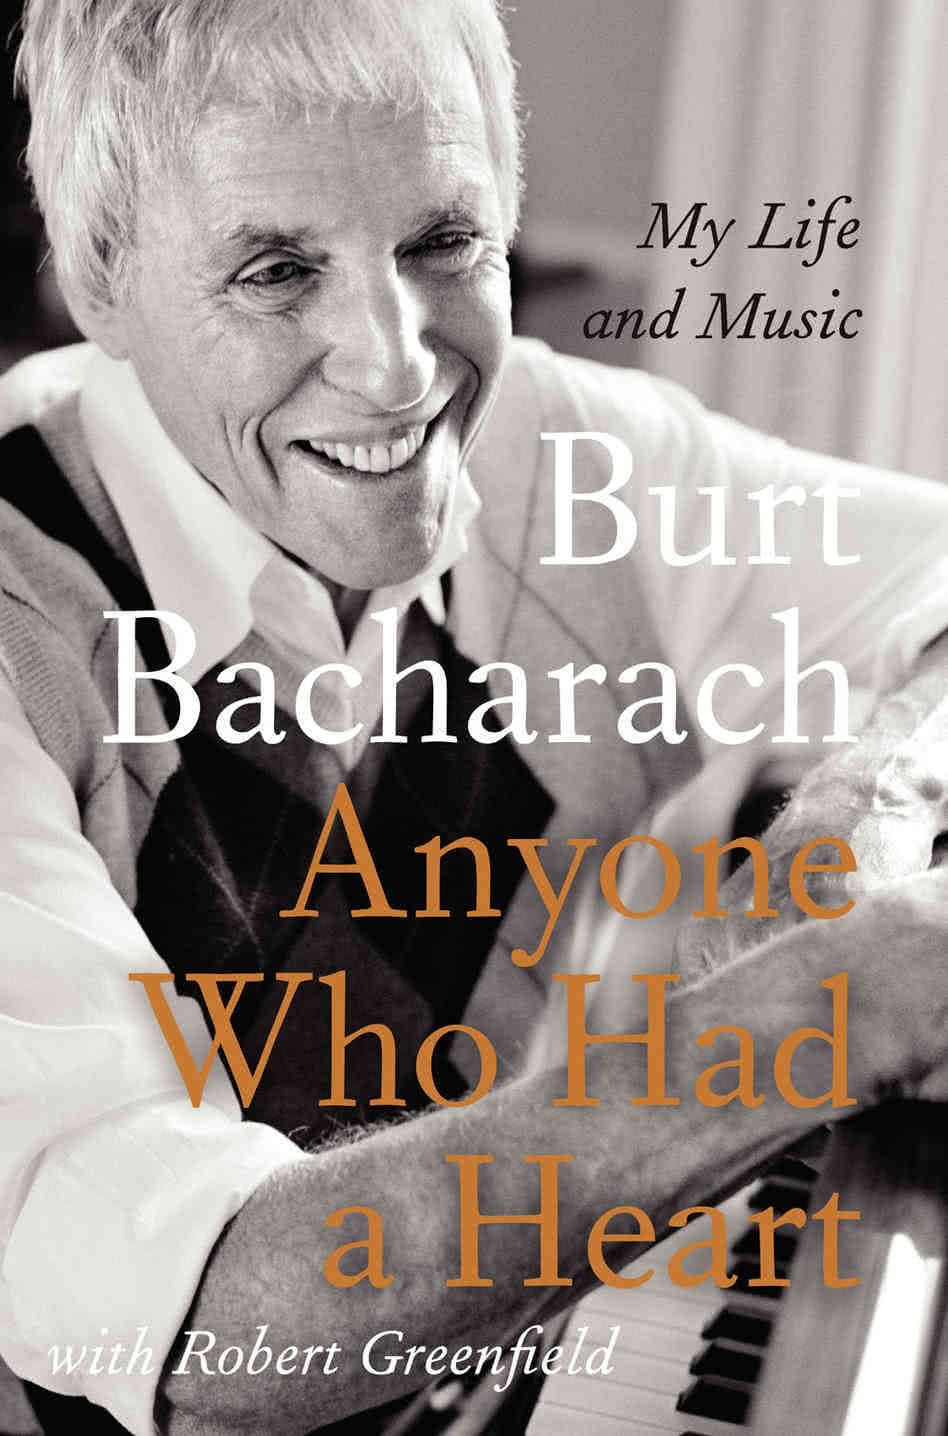 Burt Bacharach Anyone who had a heart